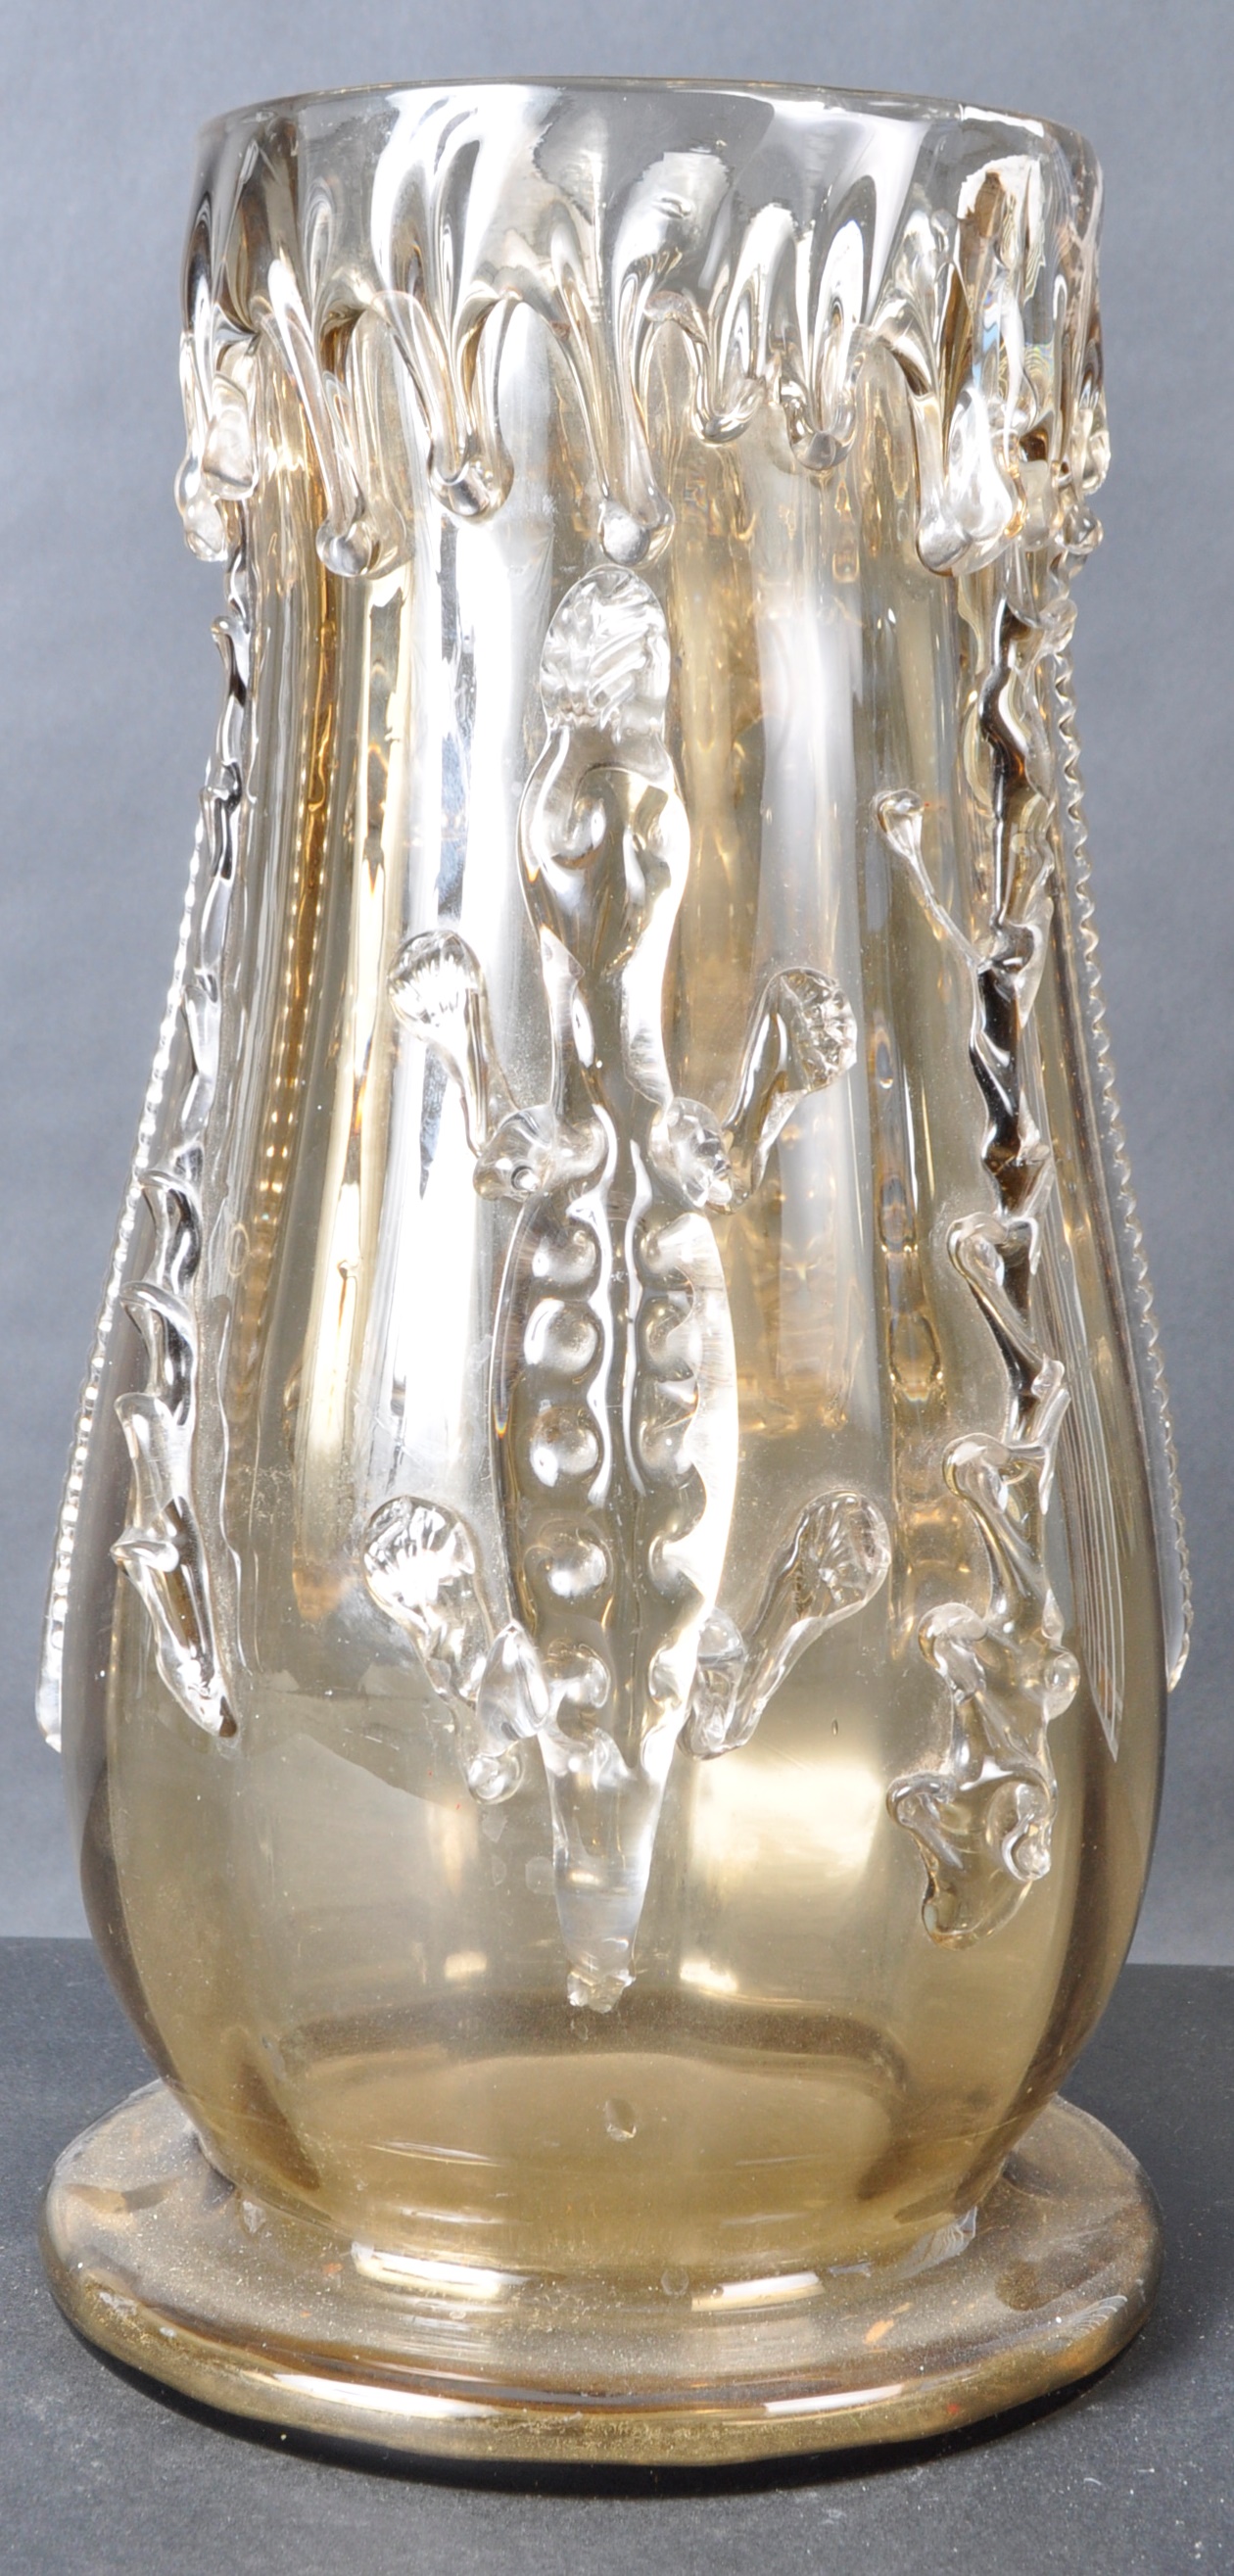 EARLY 20TH CENTURY MOSER SALAMANDER ART GLASS VASE - Image 2 of 4